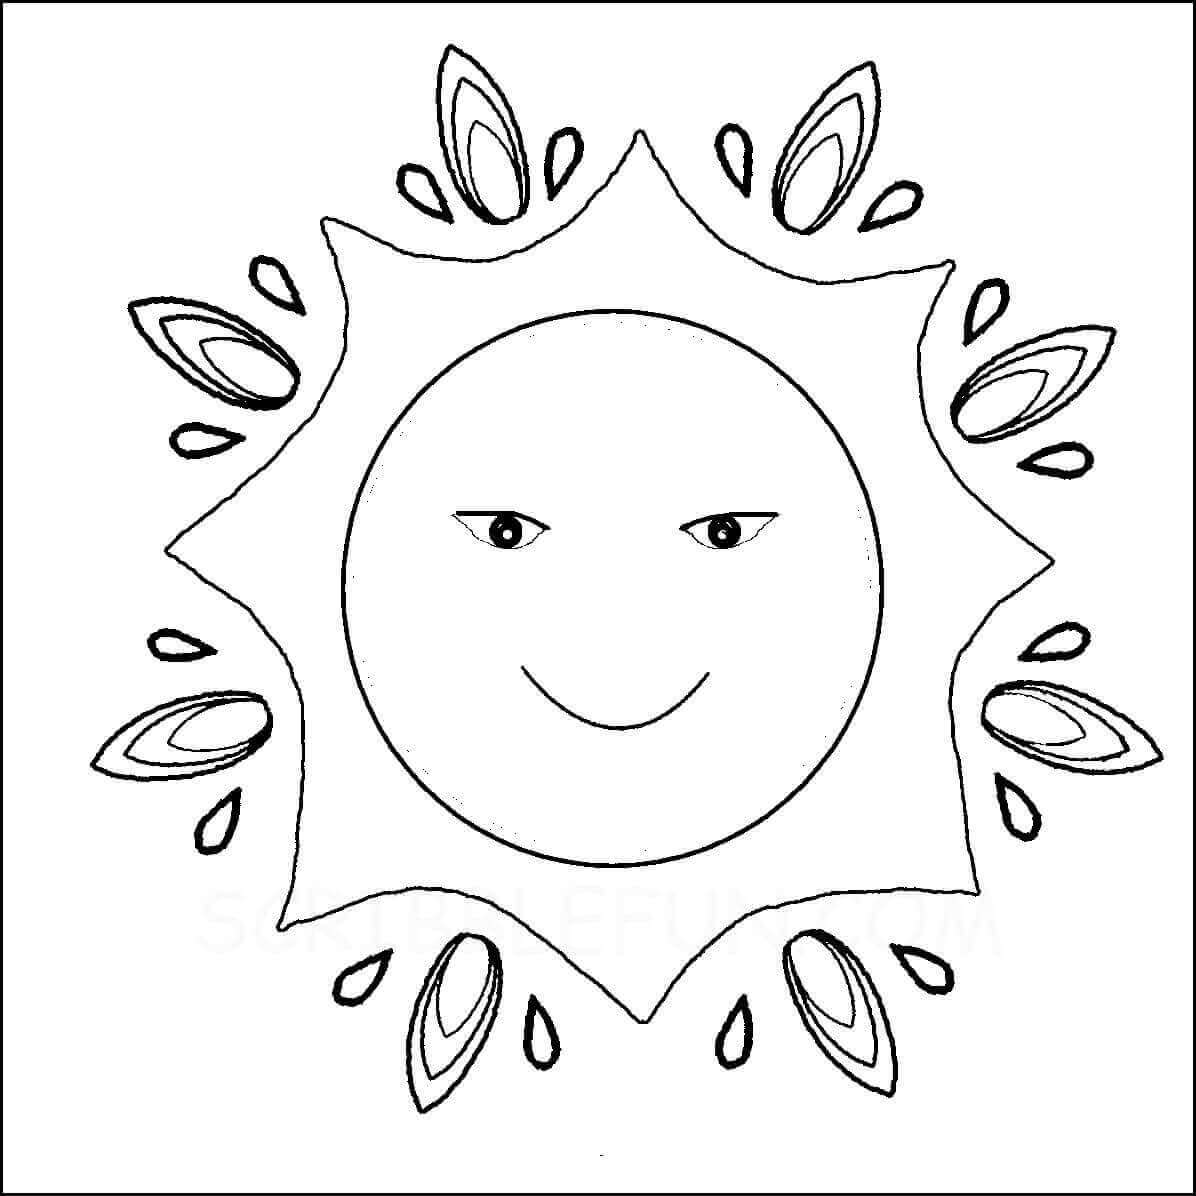 Sun goddess coloring page